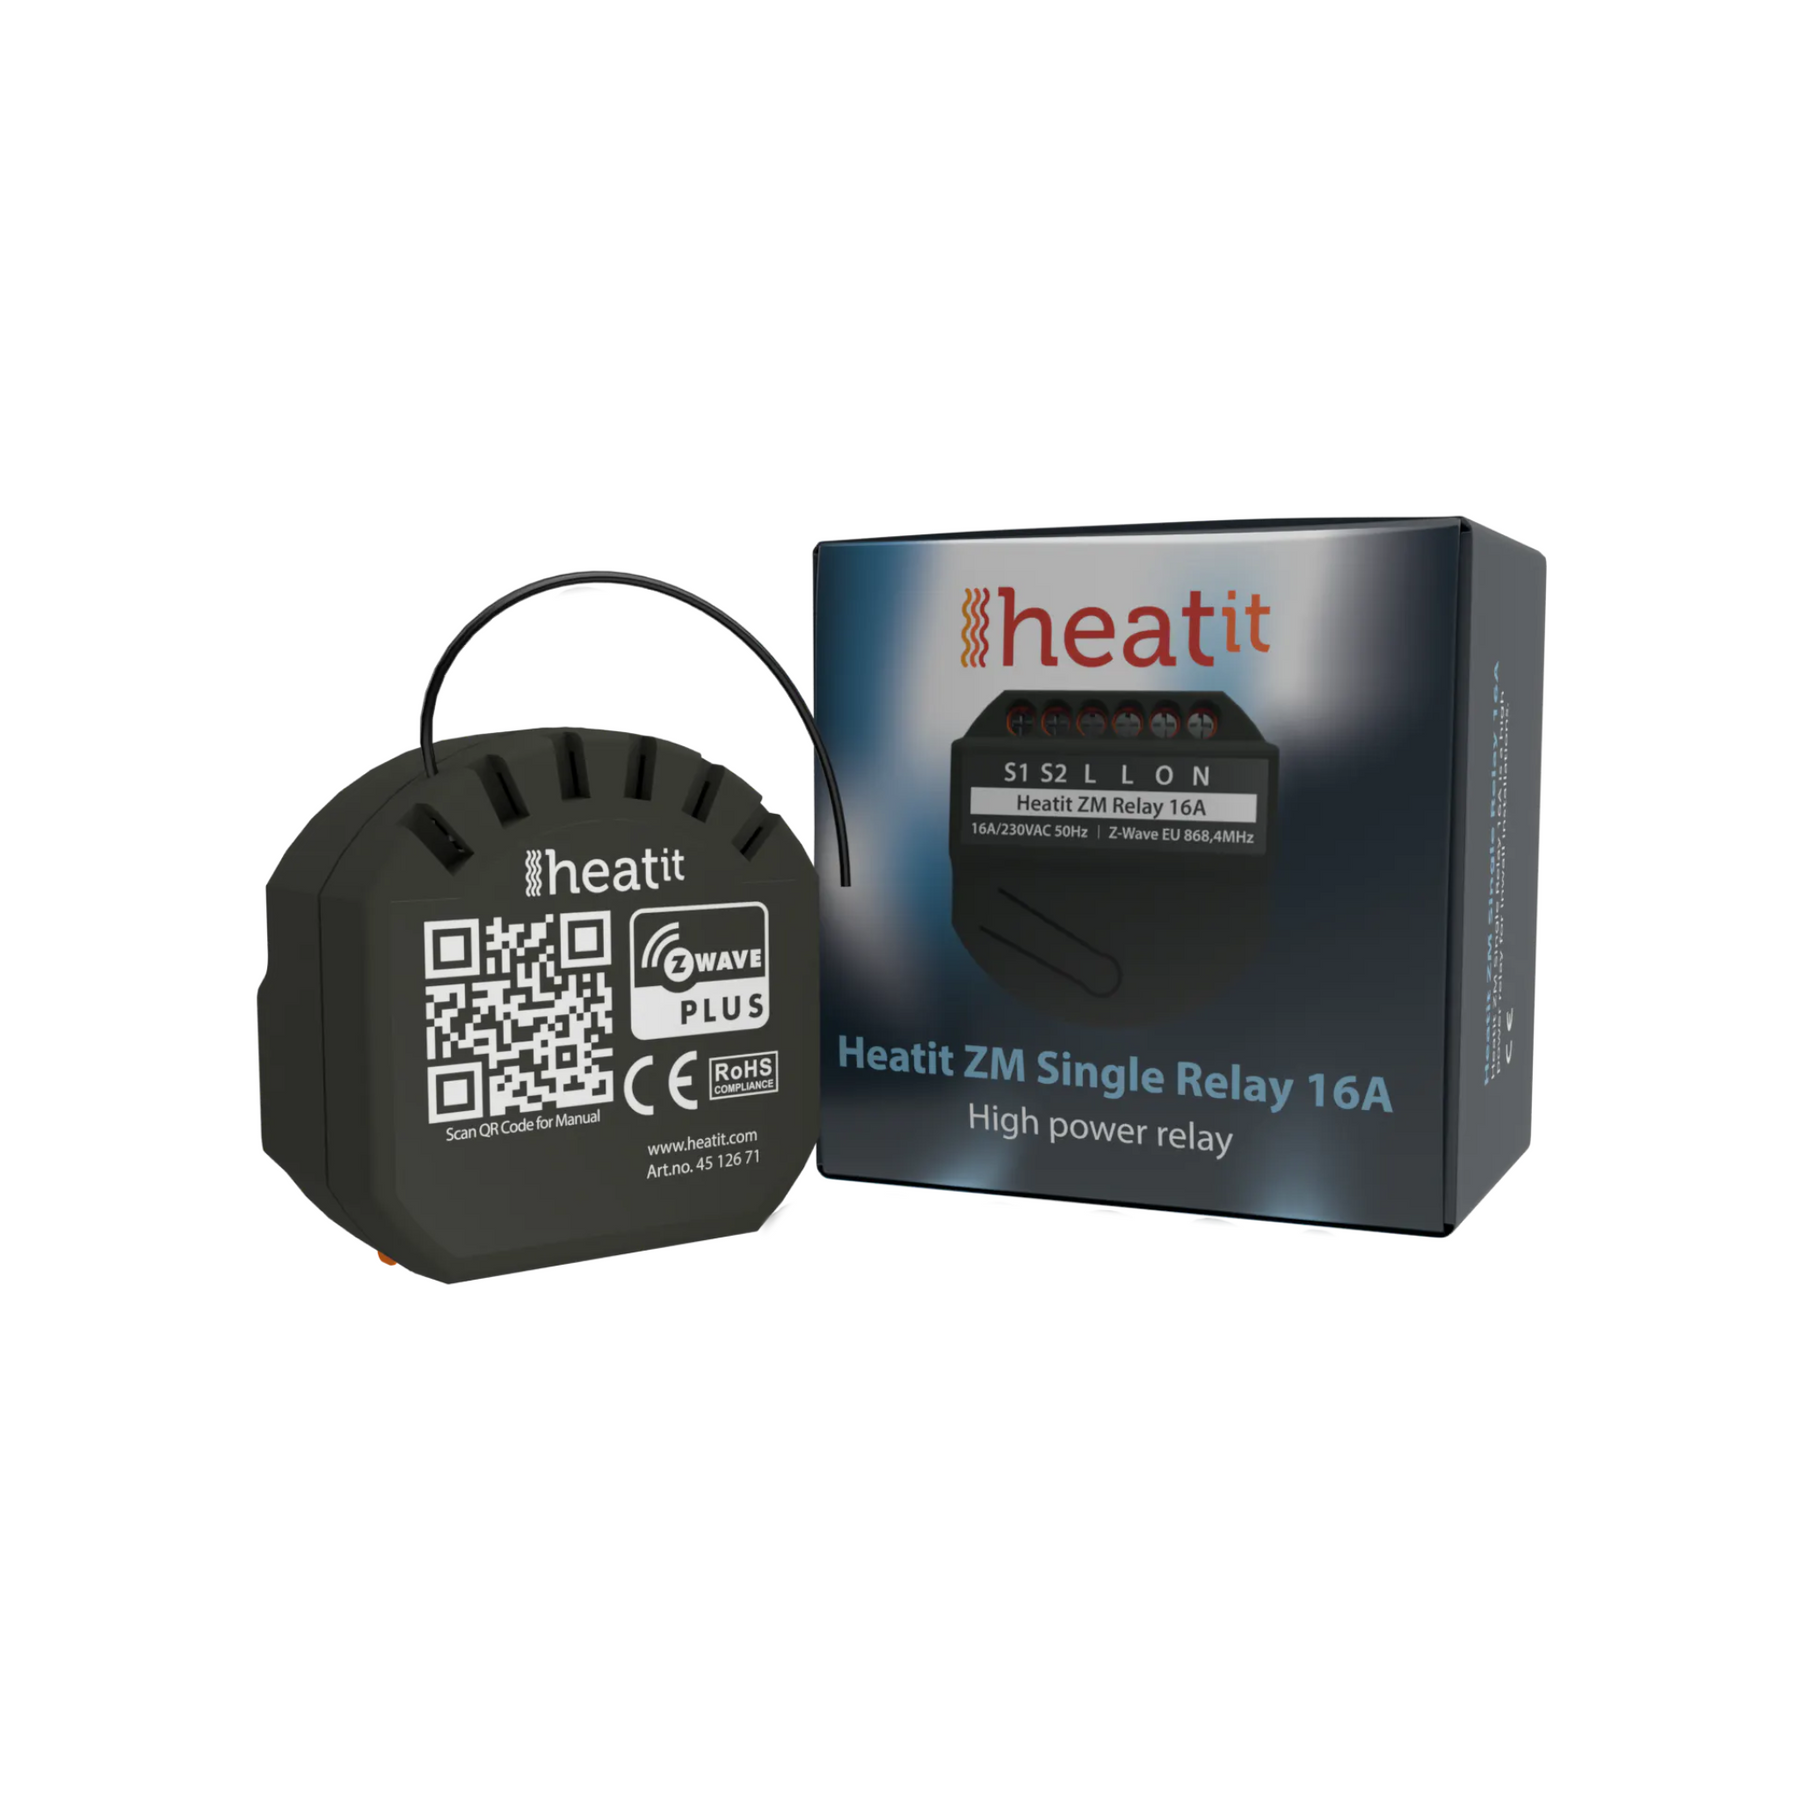 Heatit ZM Thermostat 16A incl. sensor 10kOhm